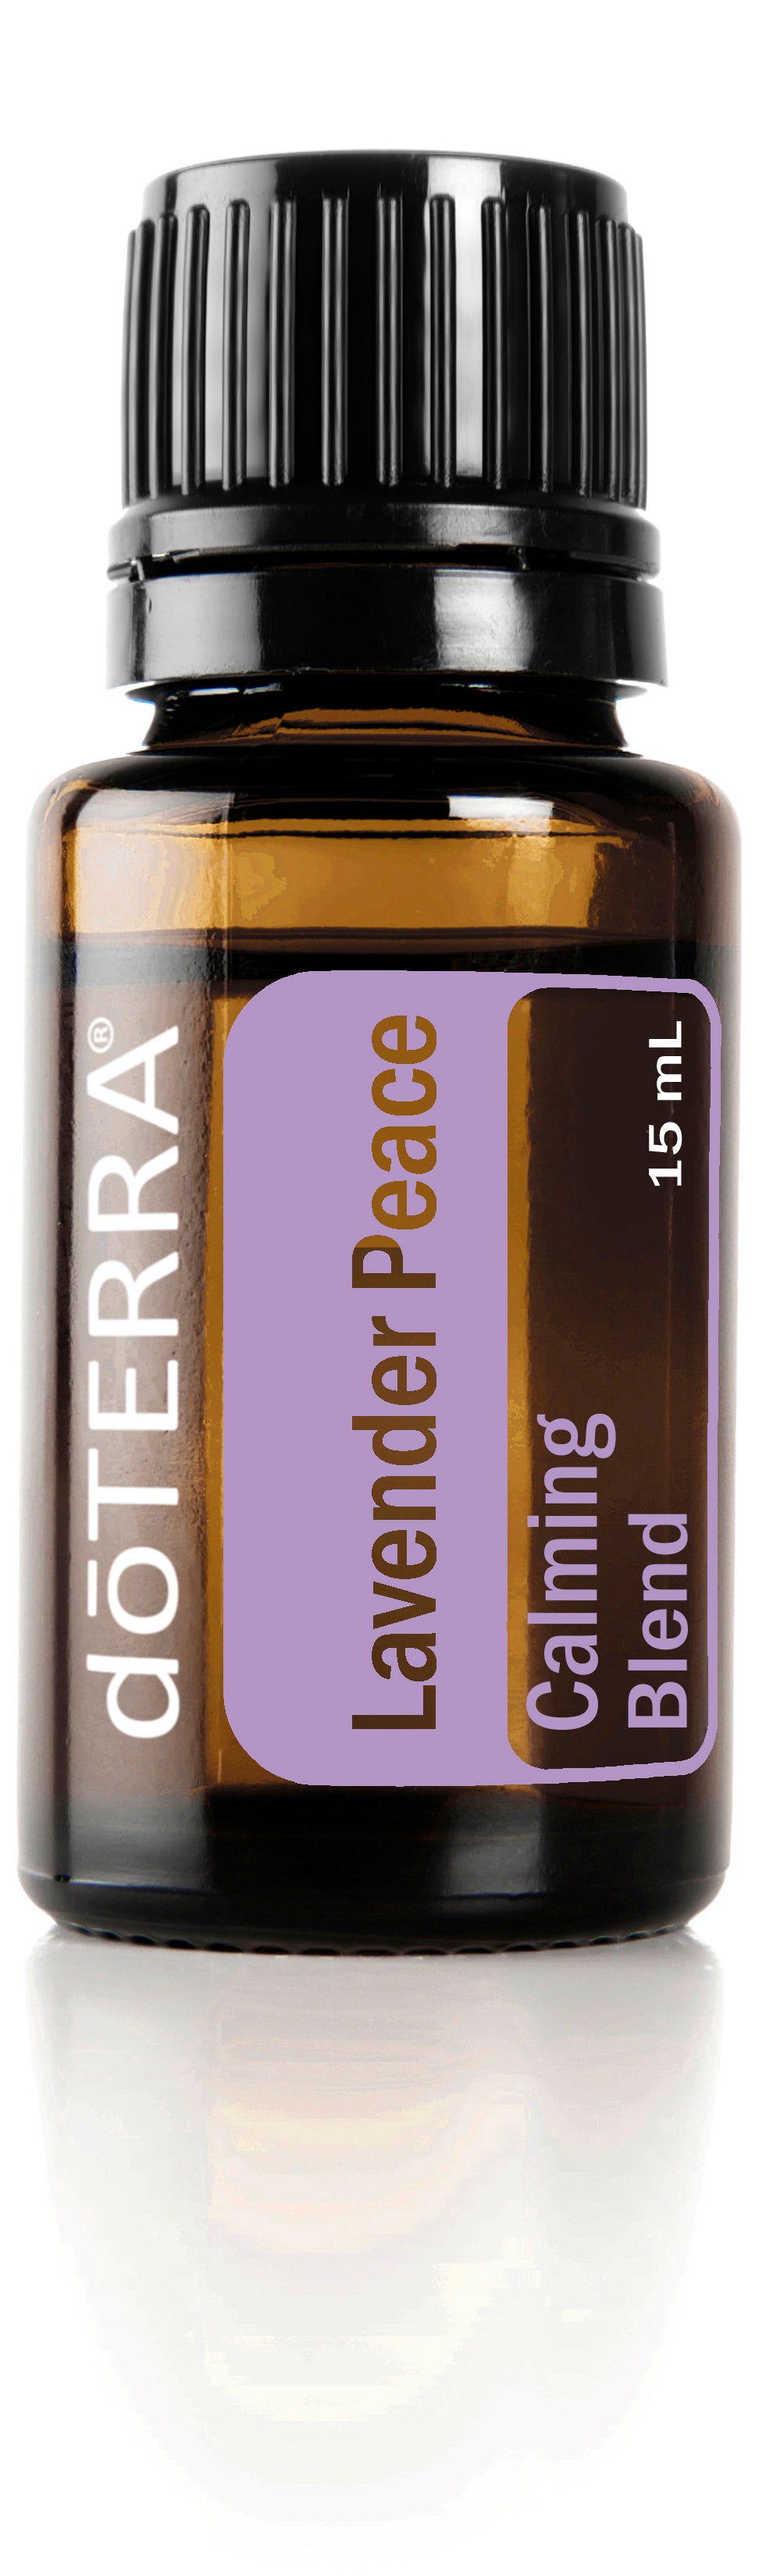 DoTerra - Lavender Peace - Calming Blend 15ml - Essential Oils